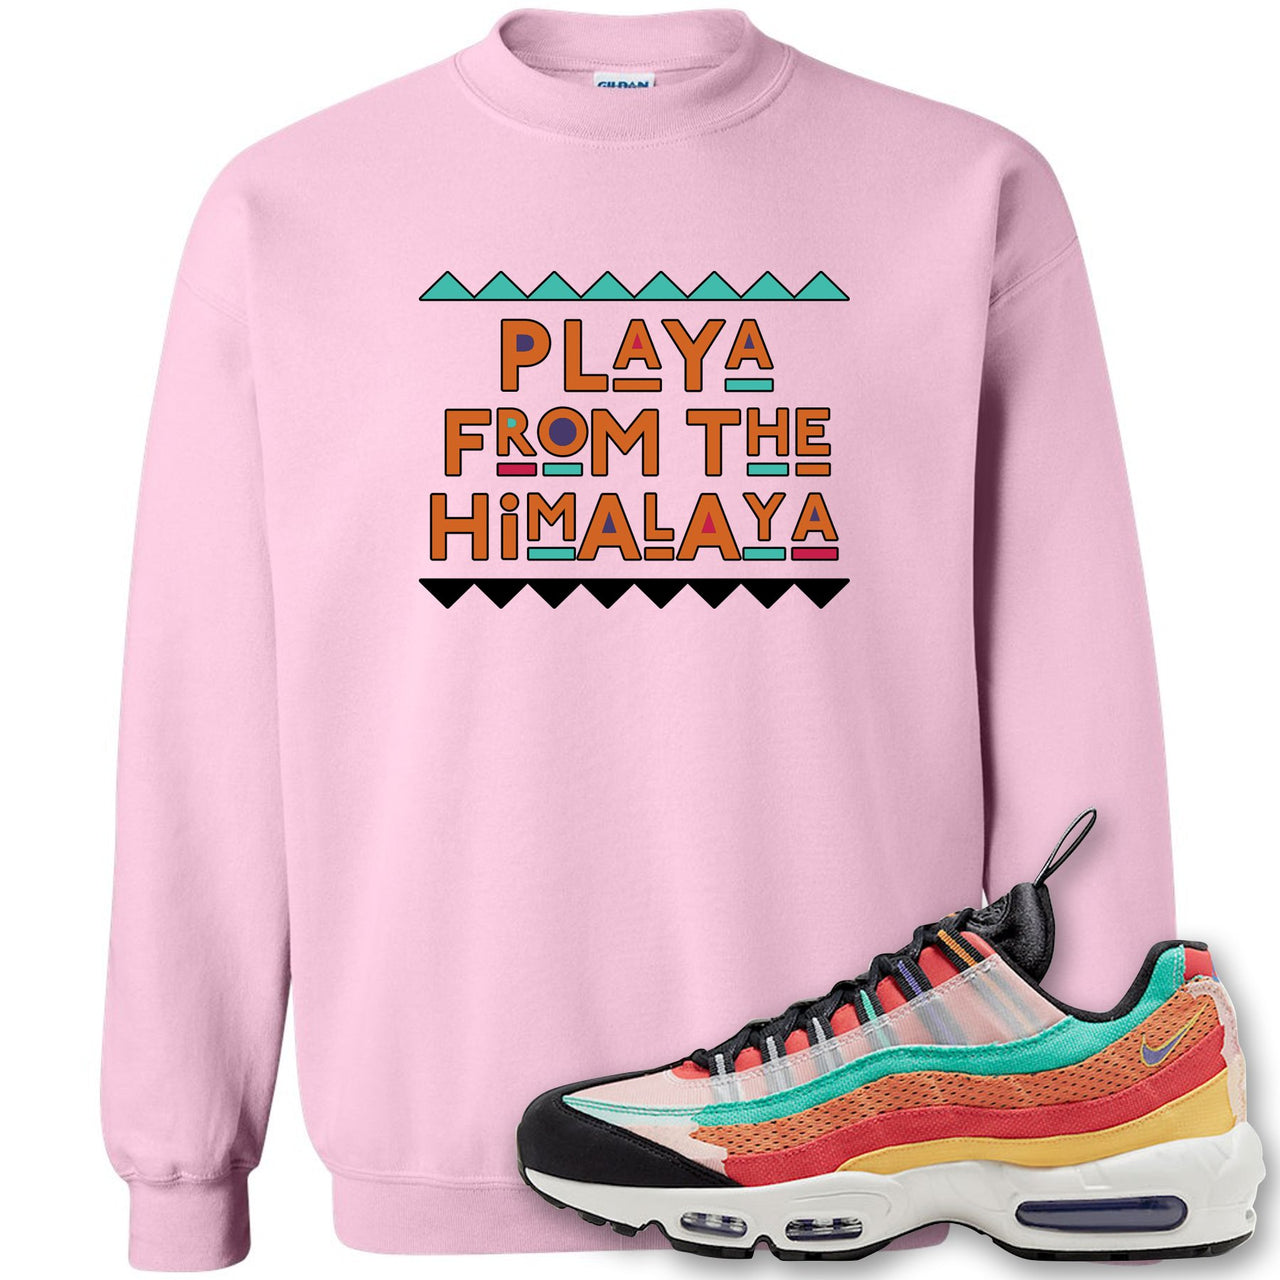 Air Max 95 Black History Month Sneaker Light Pink Crewneck Sweatshirt | Crewneck to match Nike Air Max 95 Black History Month Shoes | Playa From The Himalaya